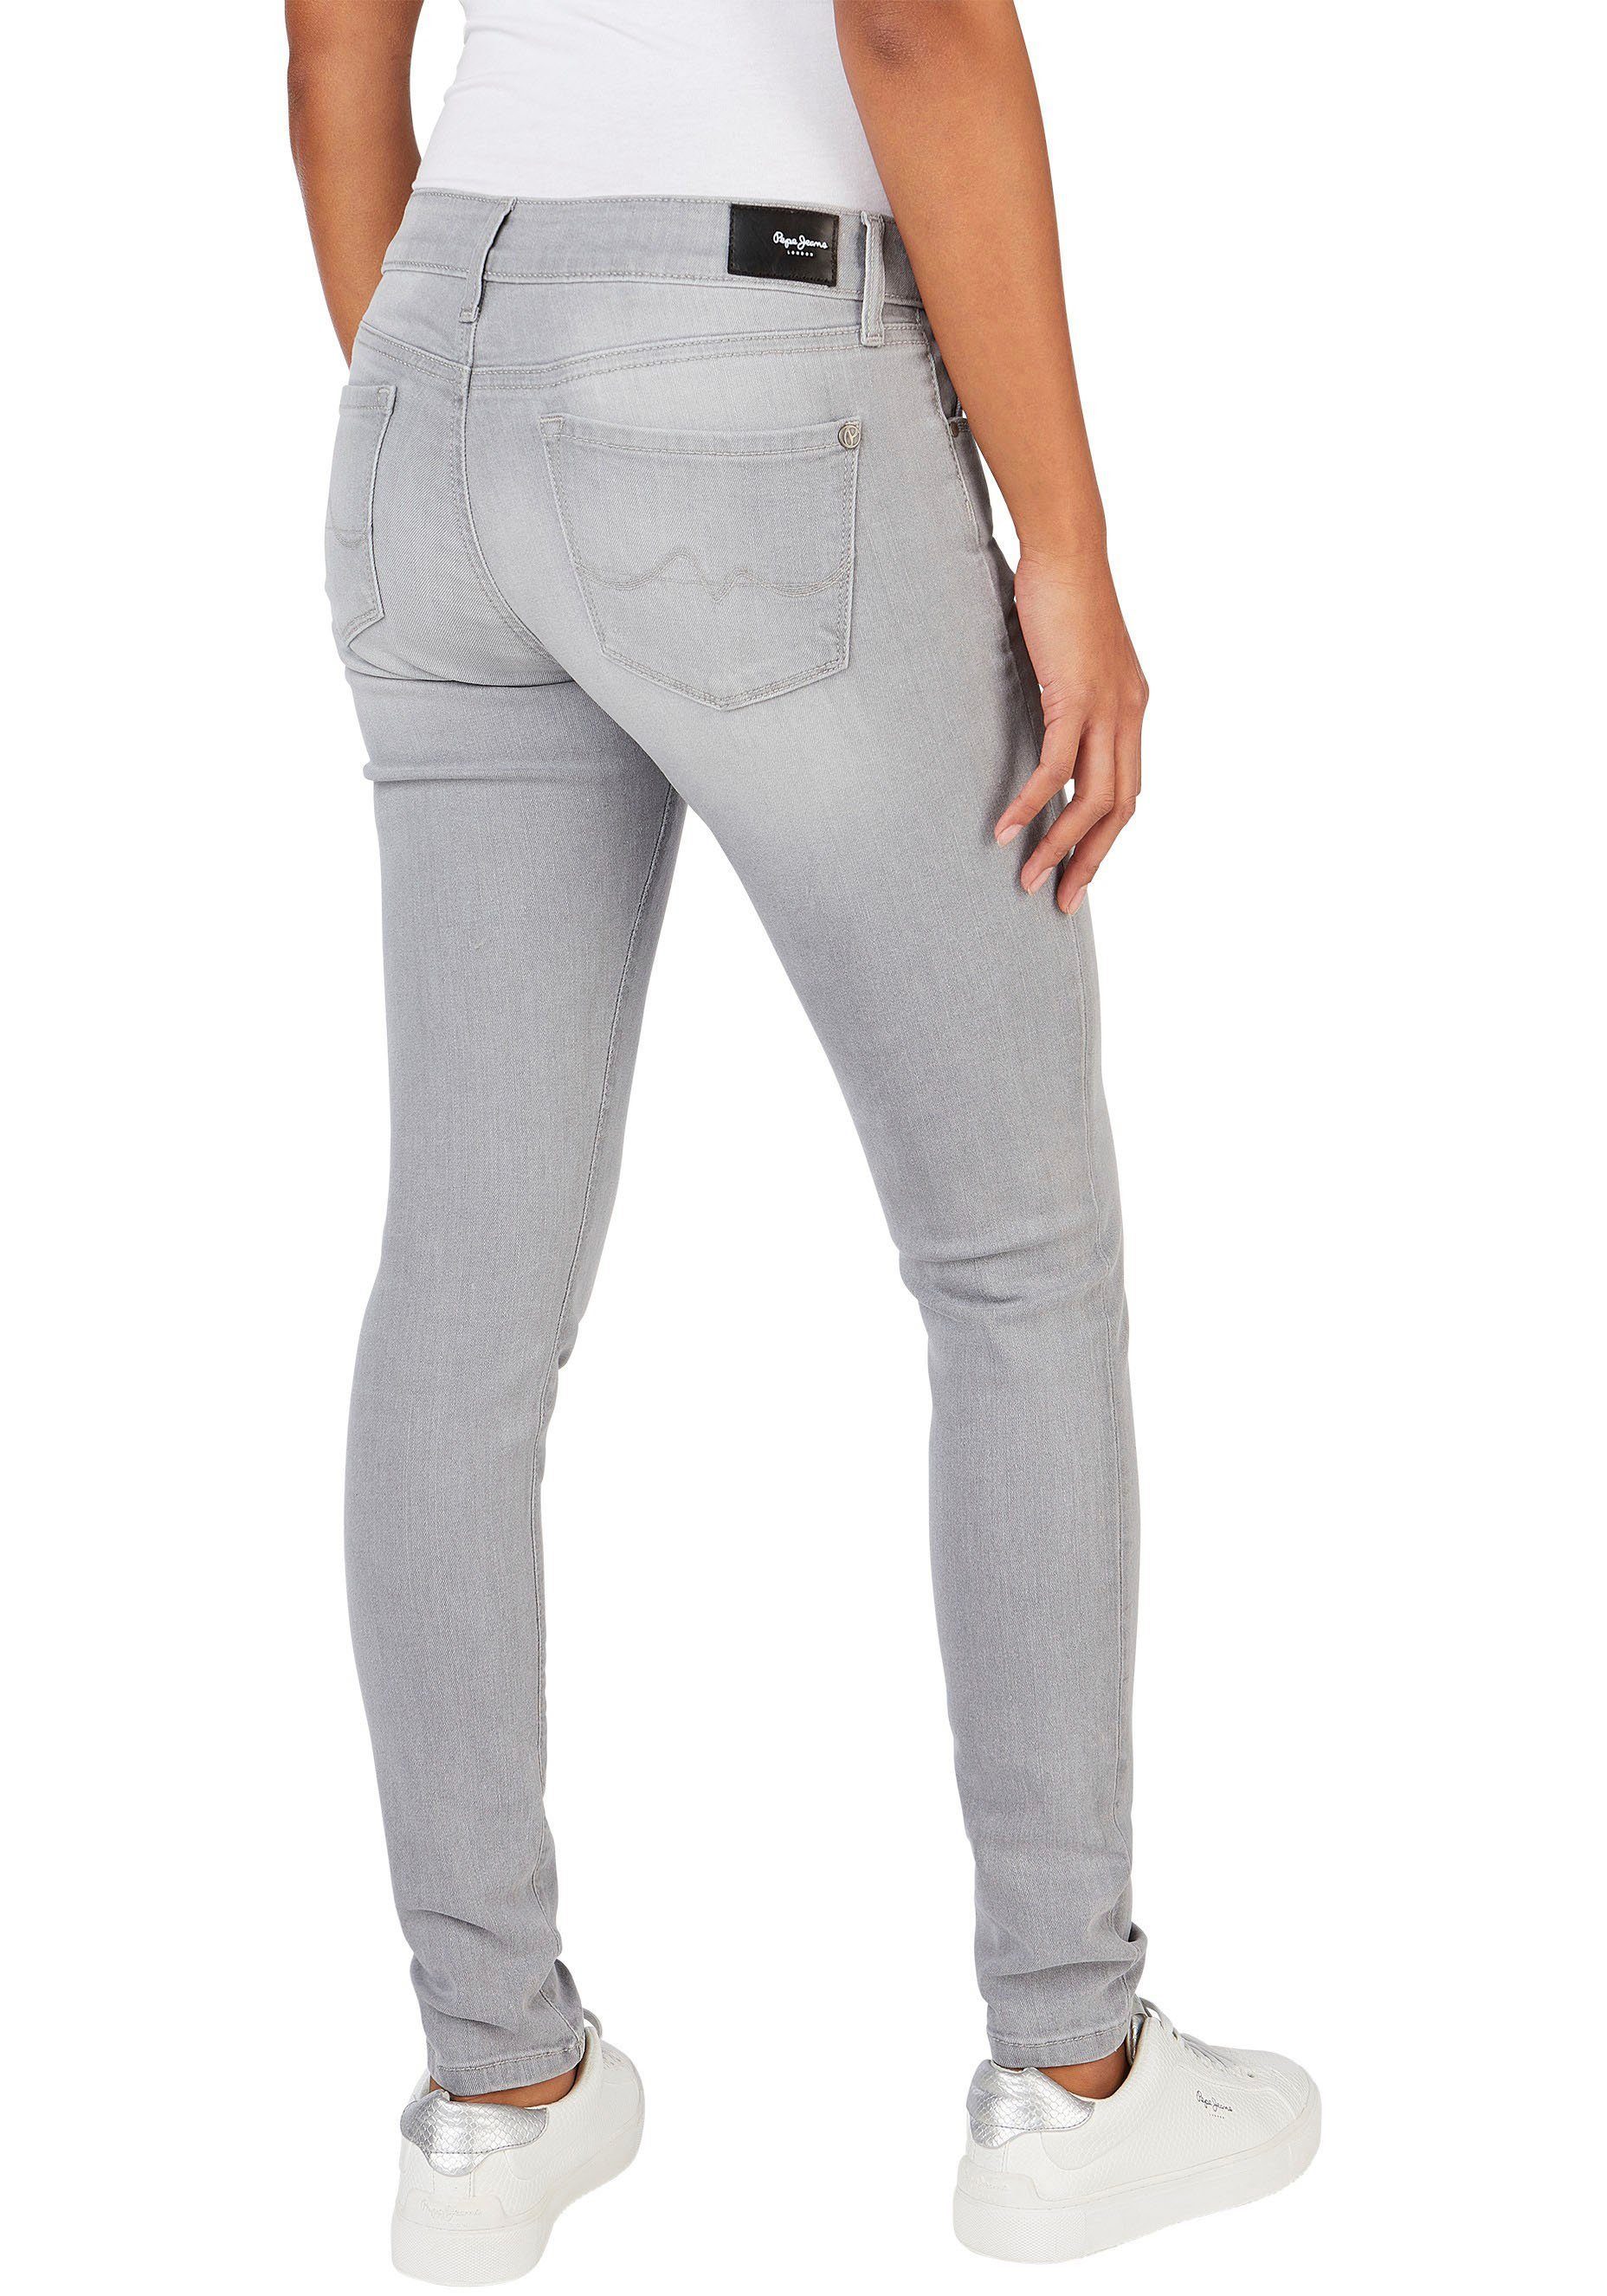 light im Jeans Bund grey mit und 5-Pocket-Stil SOHO Skinny-fit-Jeans Stretch-Anteil 1-Knopf Pepe